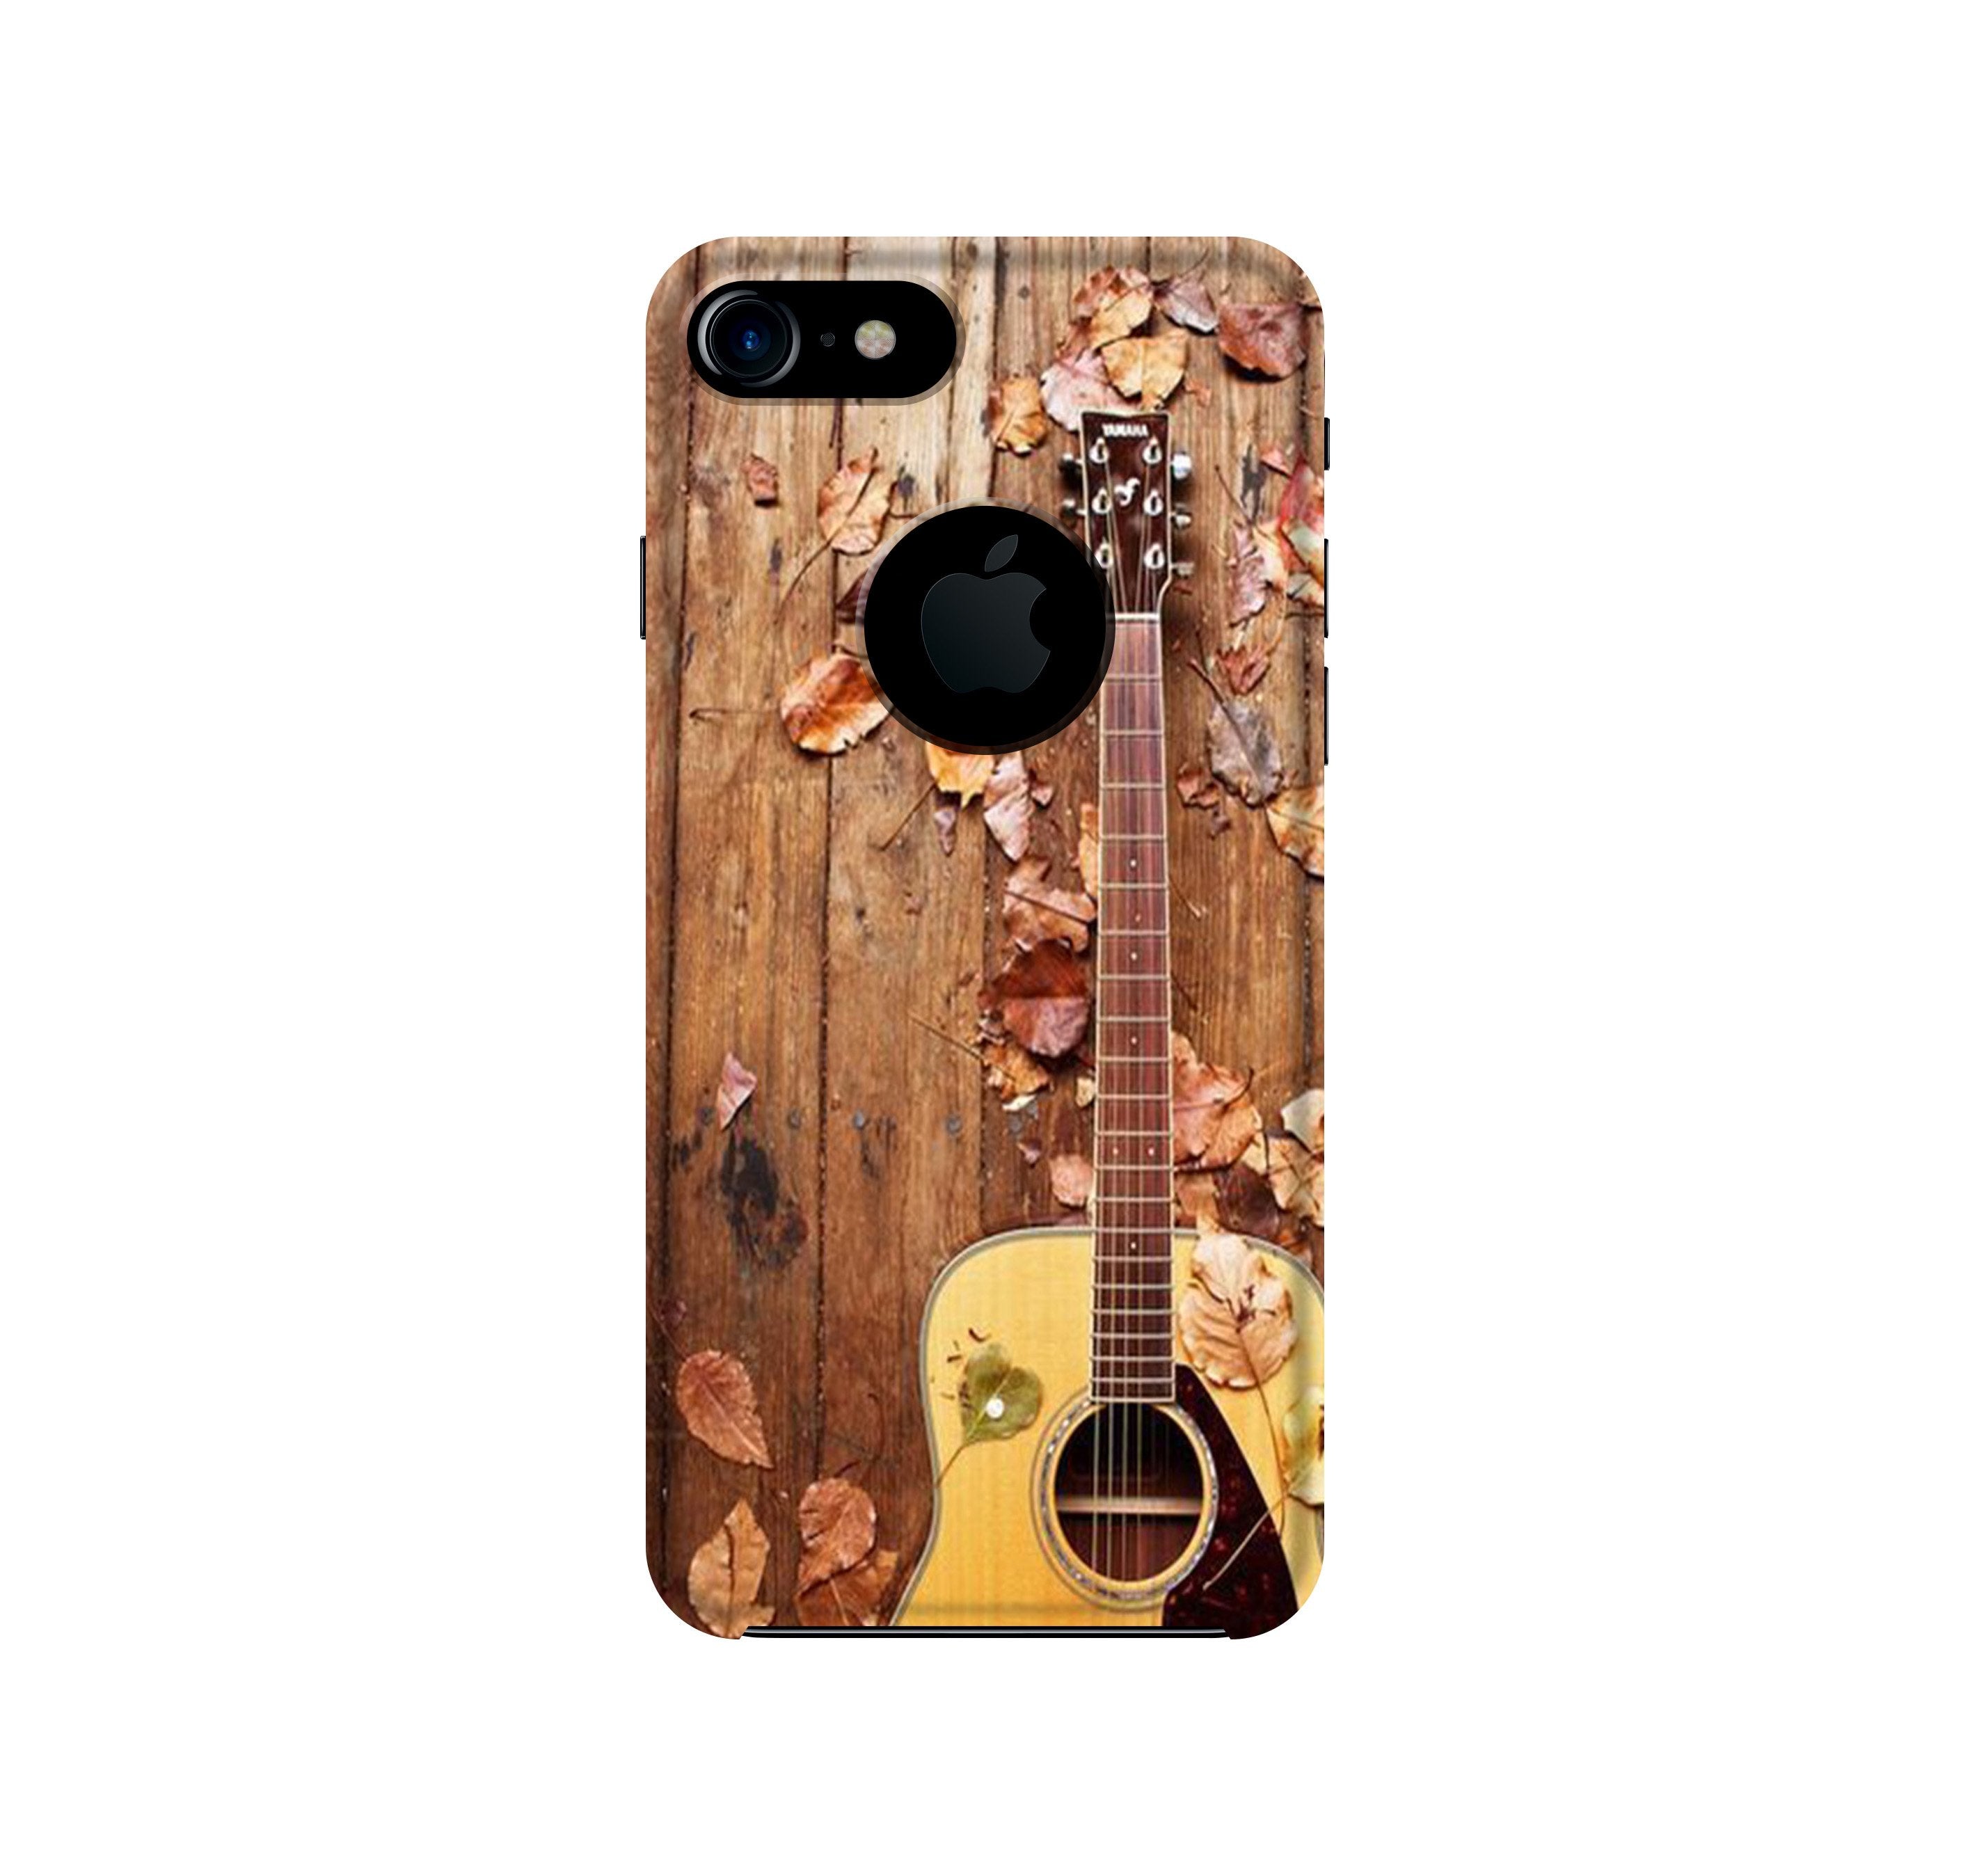 Guitar Case for iPhone 7 logo cut